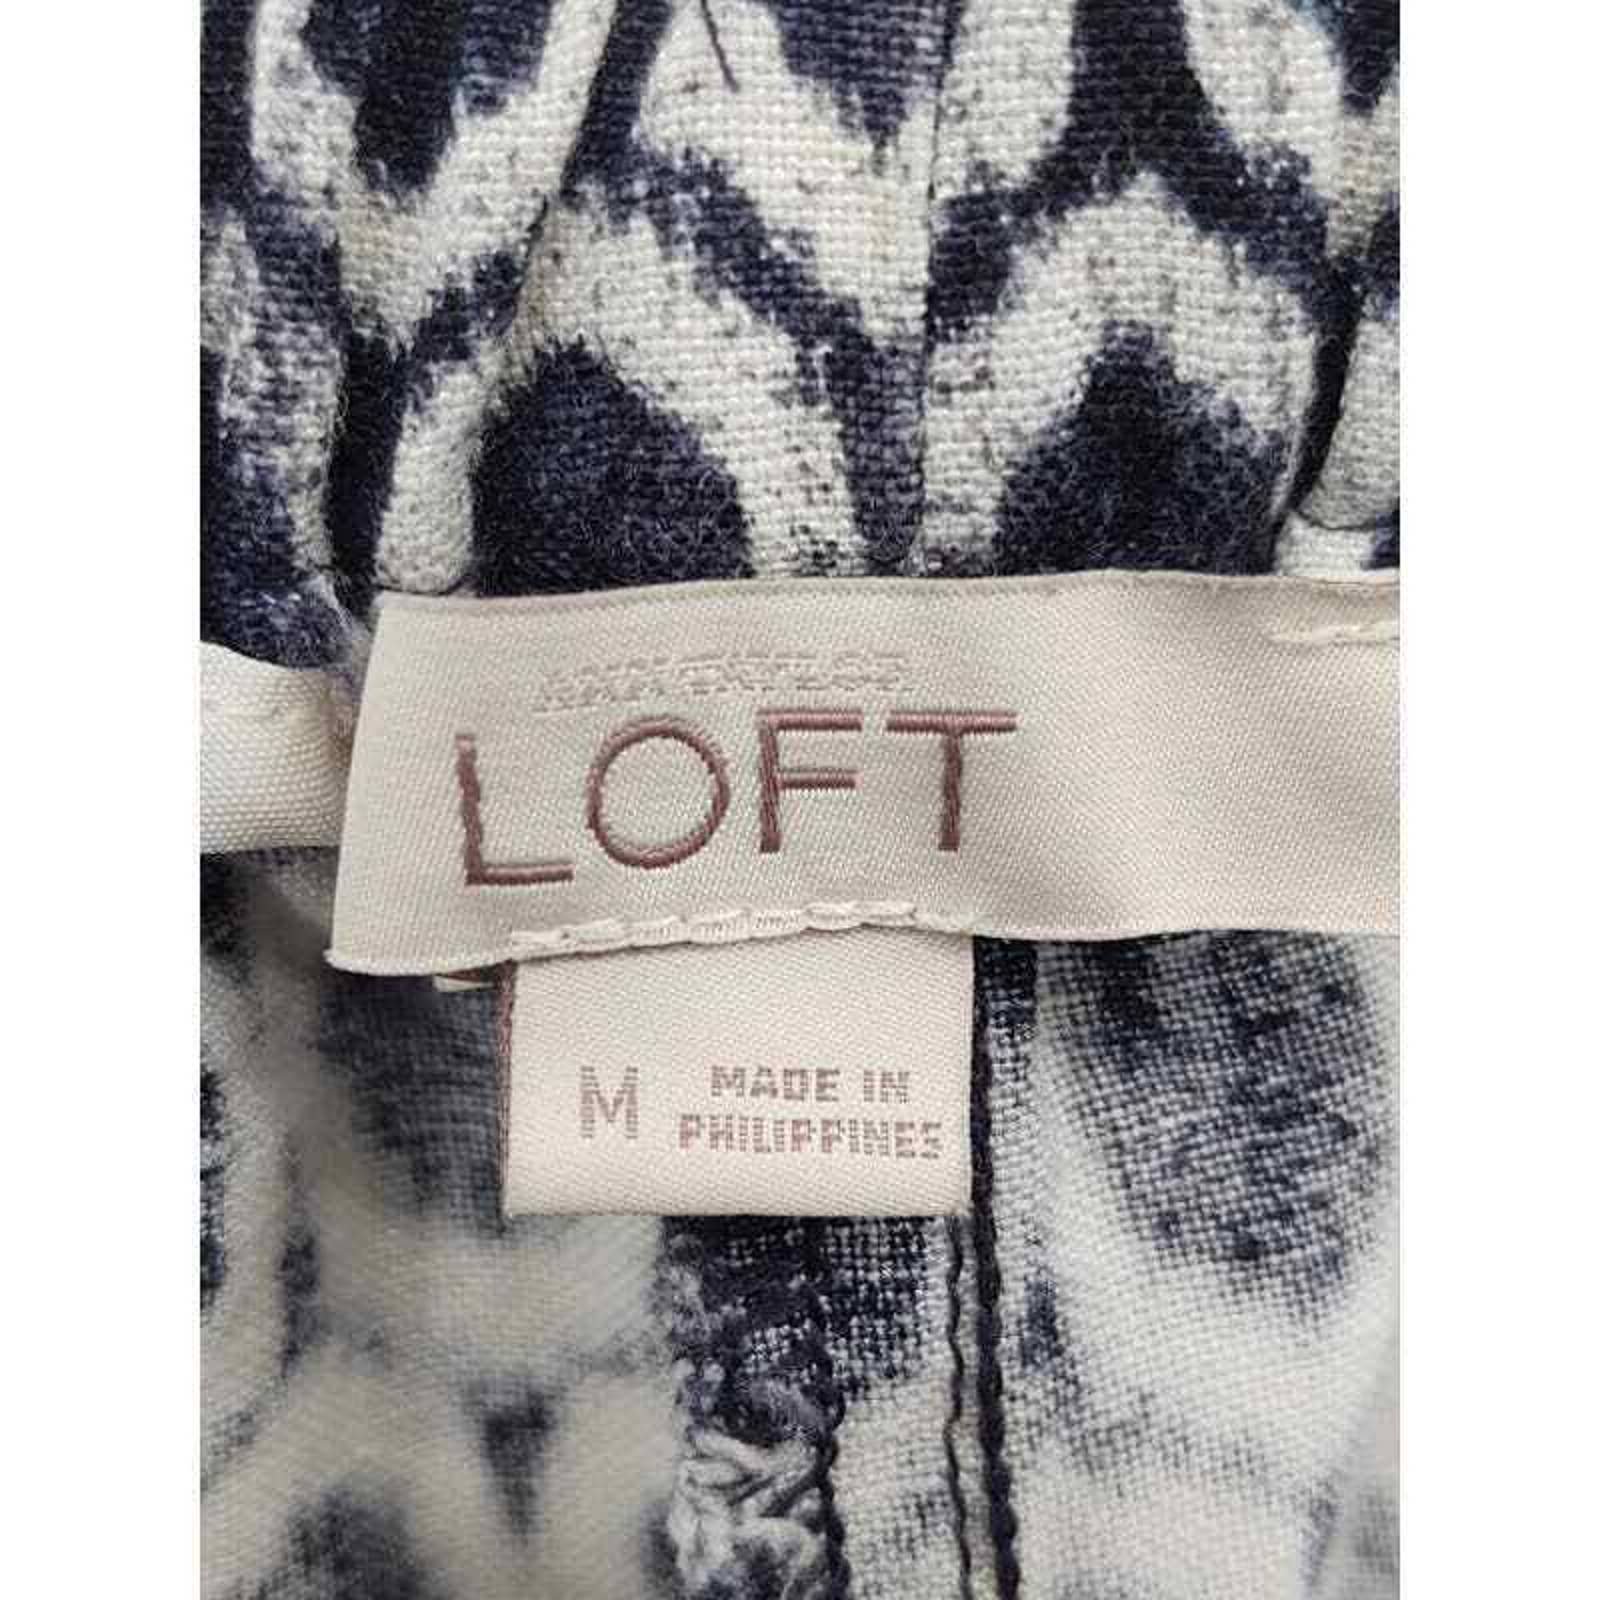 high discount LOFT Linen blend blue geometric print skirt in size M JE1vIn2I2 Cool